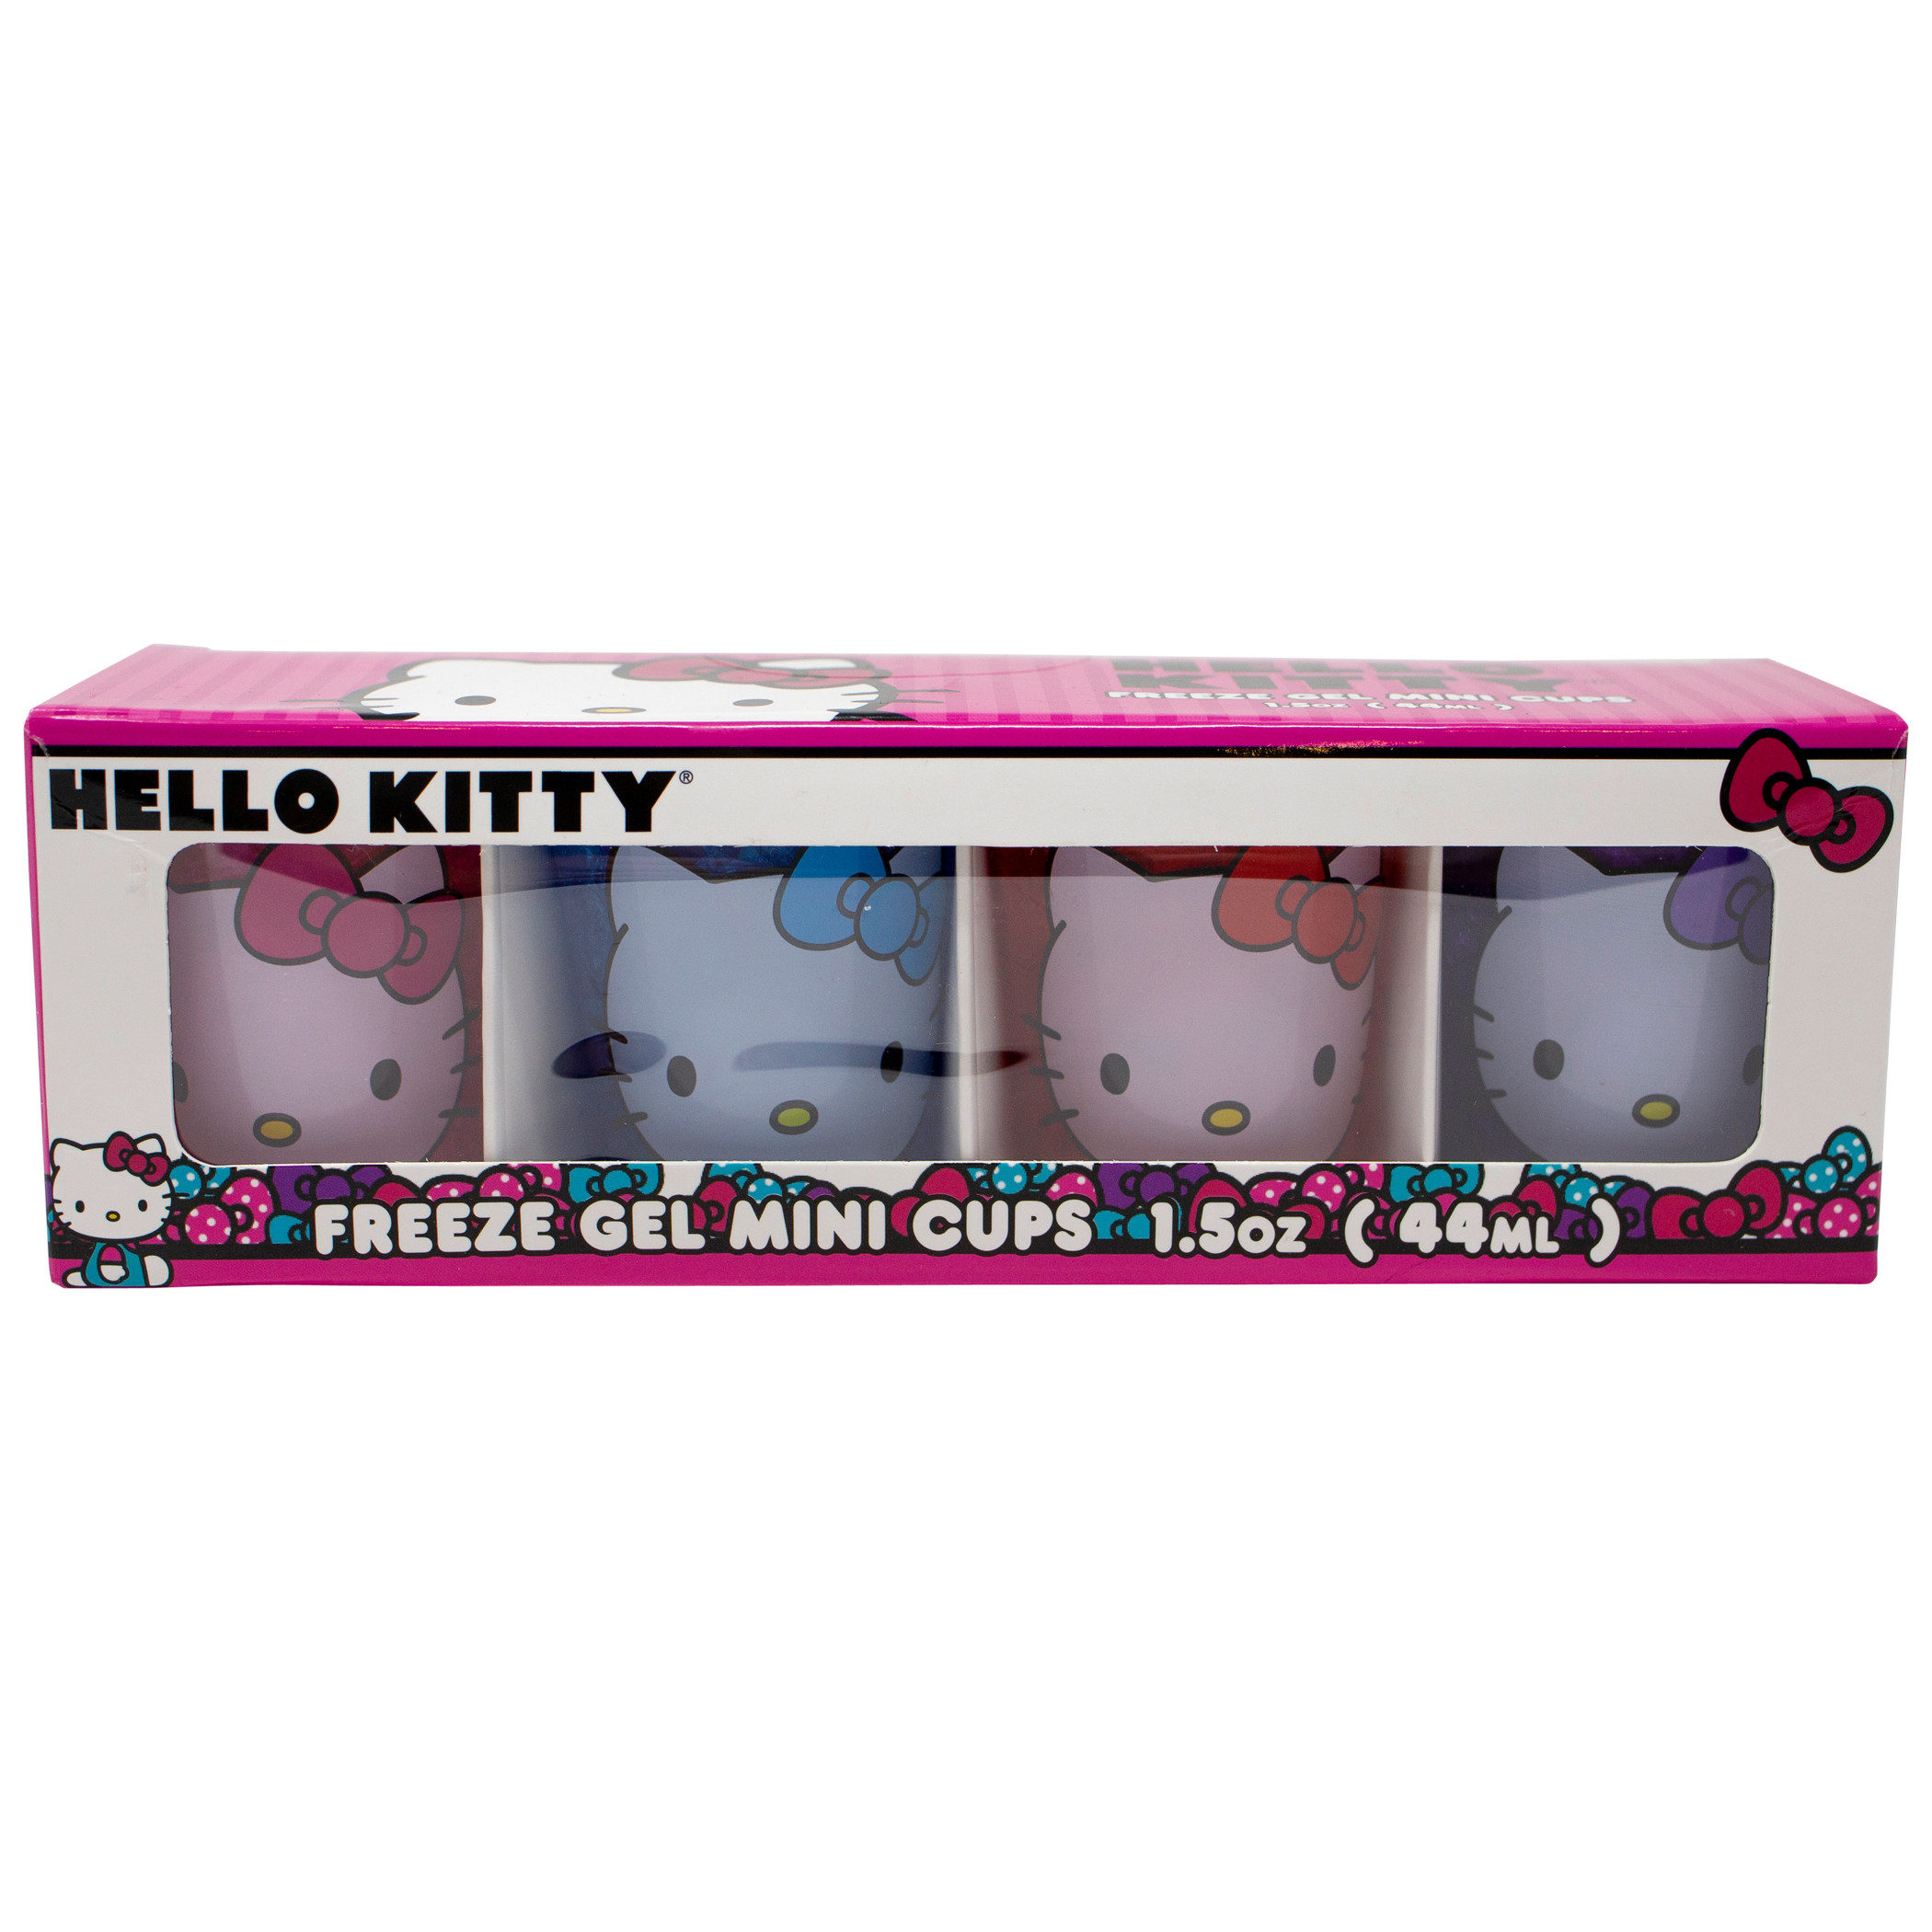 Hello Kitty Freeze Gel 4-Piece Shot Glass Set